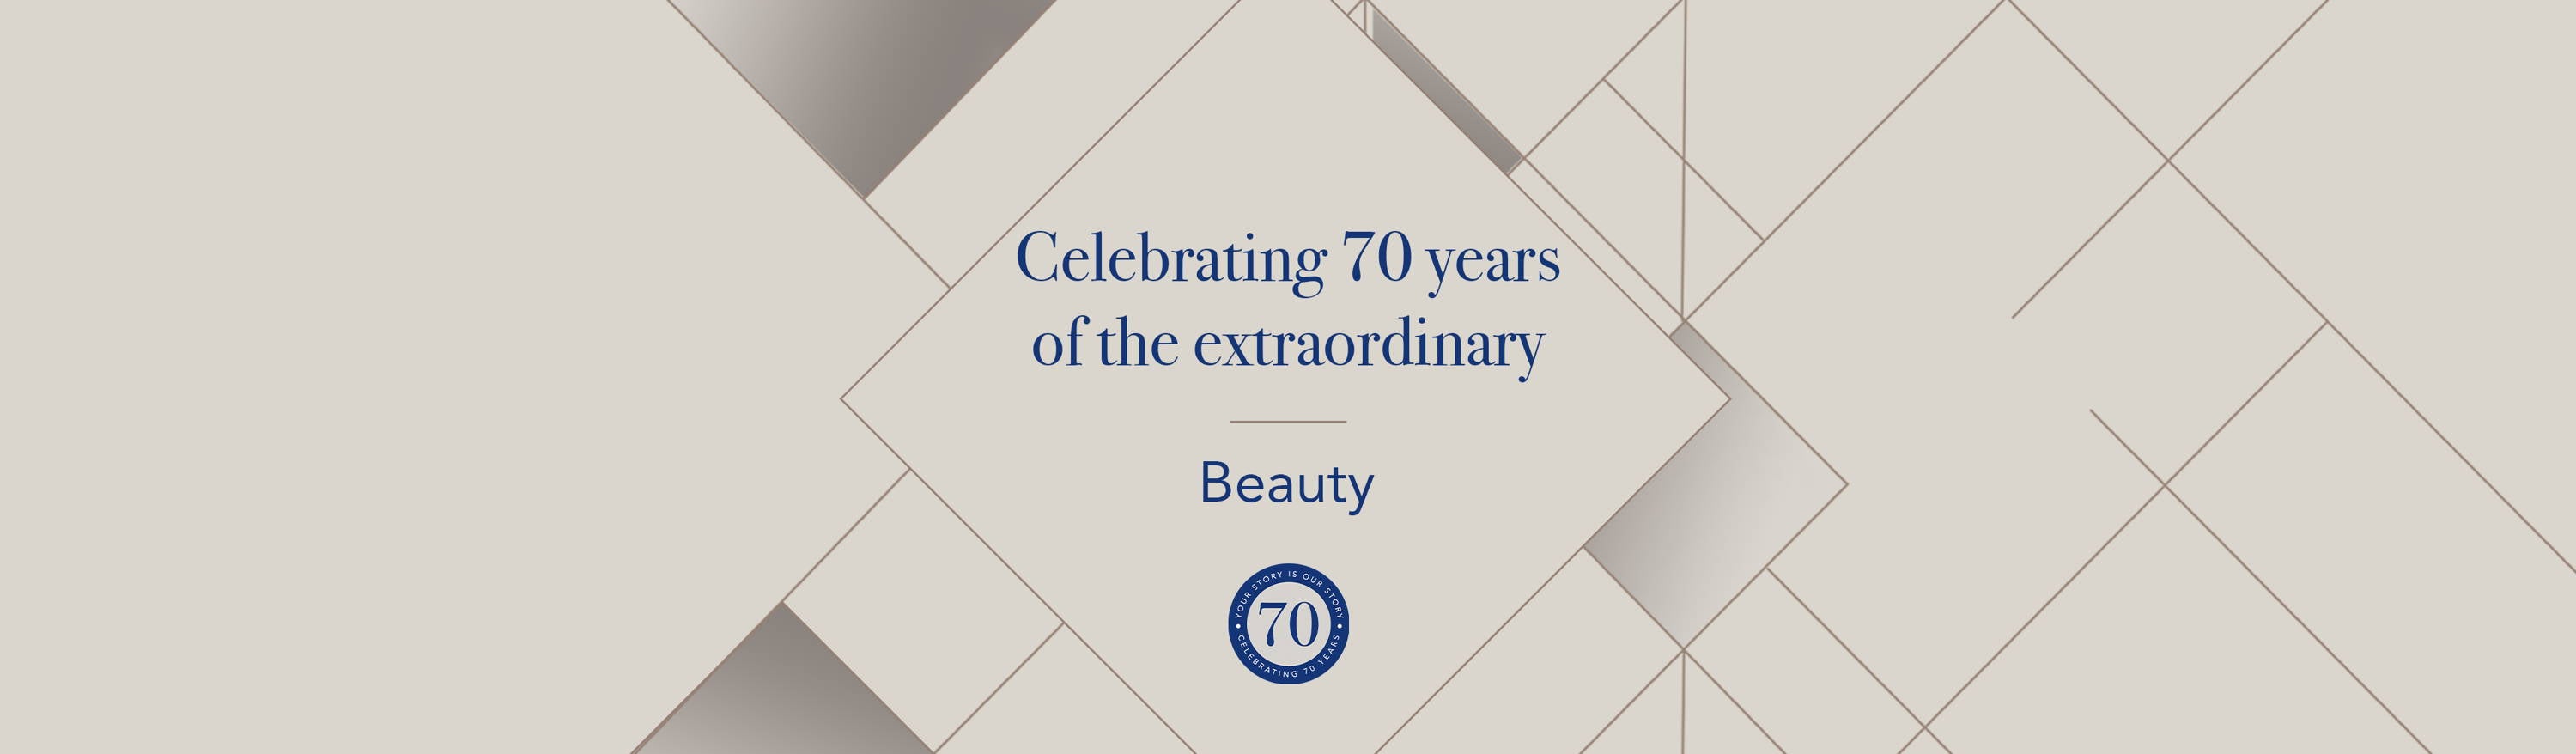 Rustan's 70th Anniversary Offers: Beauty